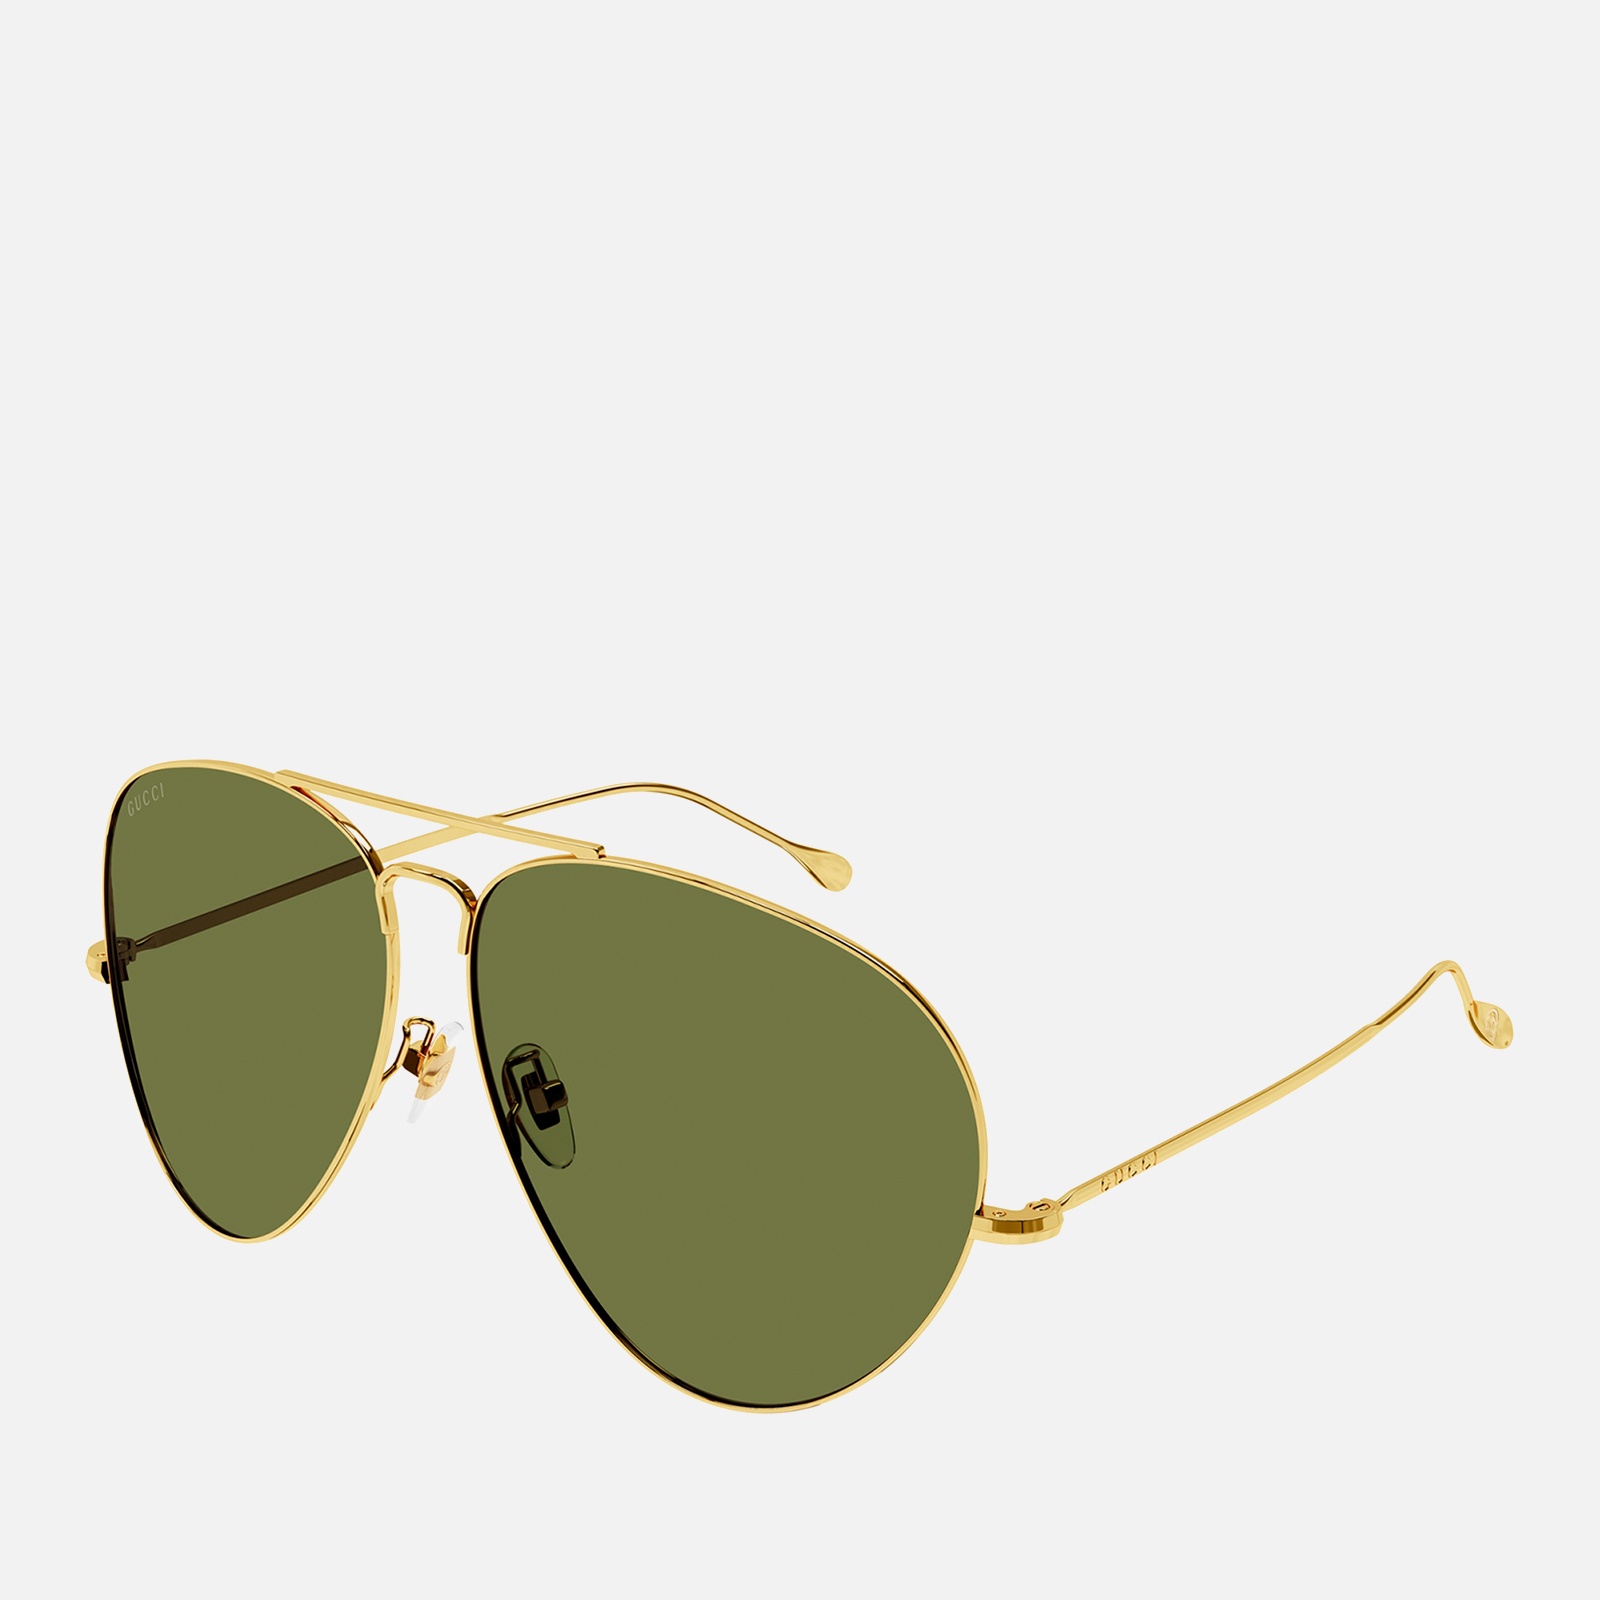 Gucci Men's Metal Aviator Sunglasses - Gold/Green - 1